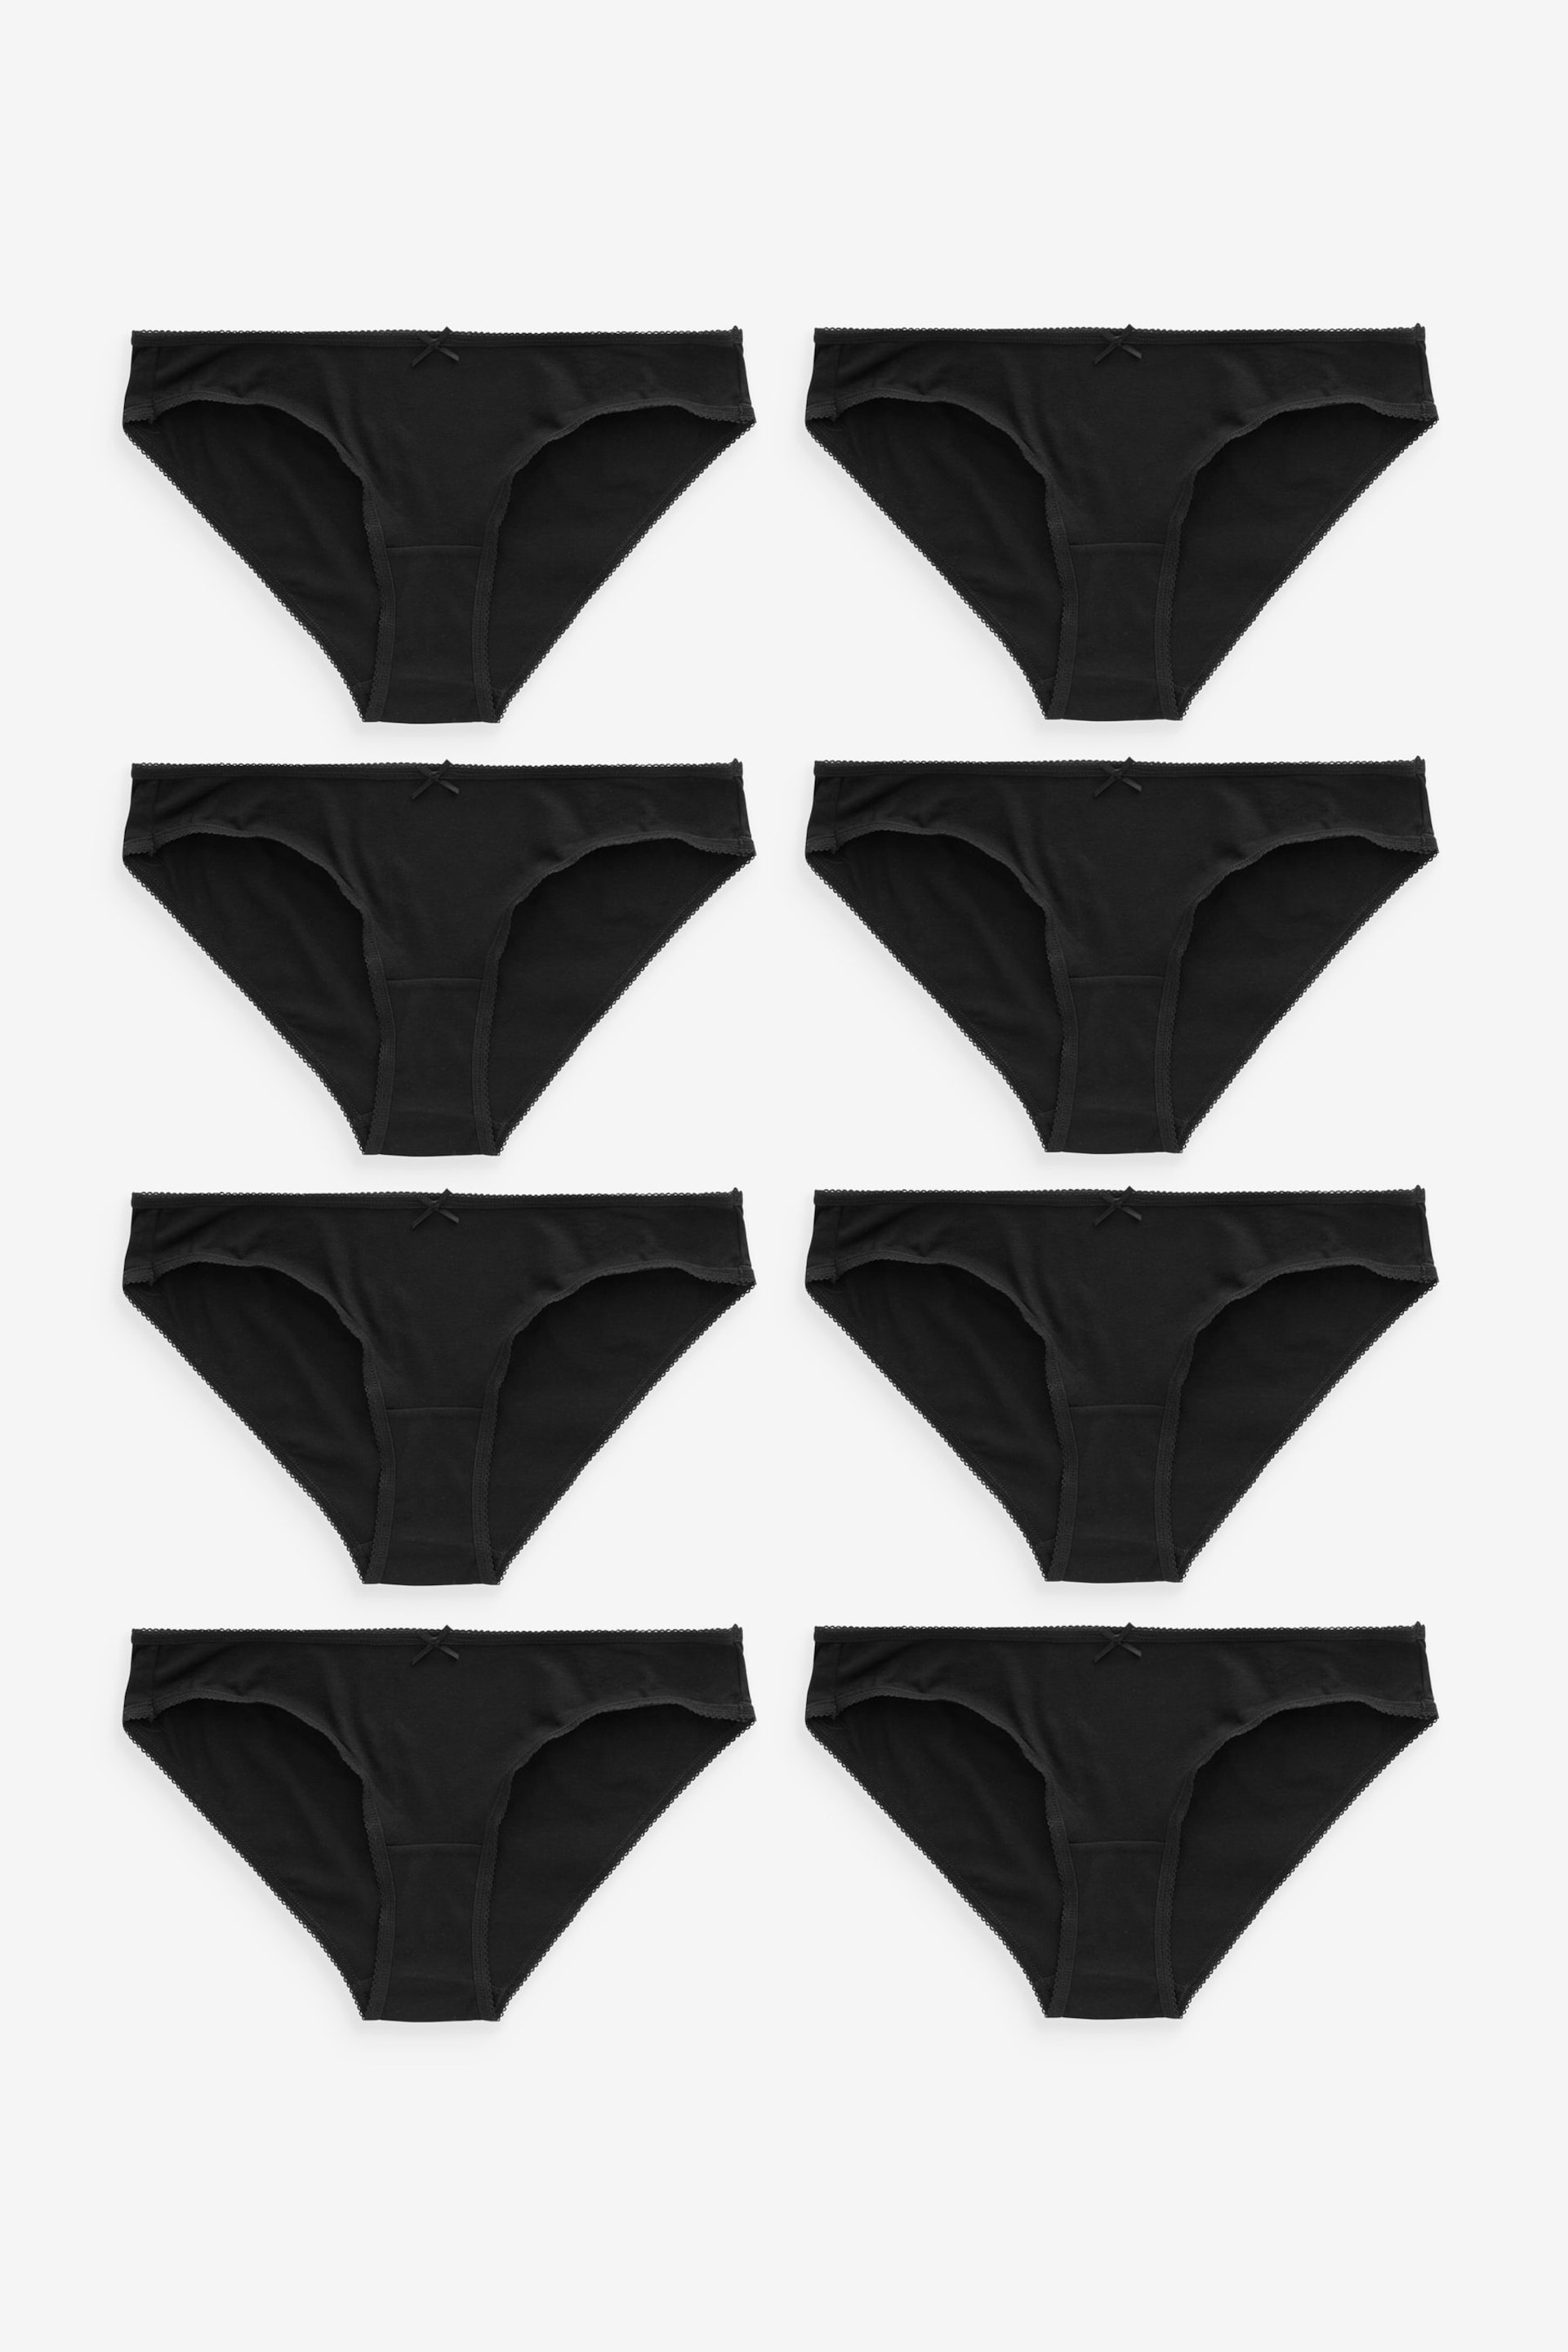 Black Bikini Cotton Rich Knickers 8 Pack - Image 4 of 5